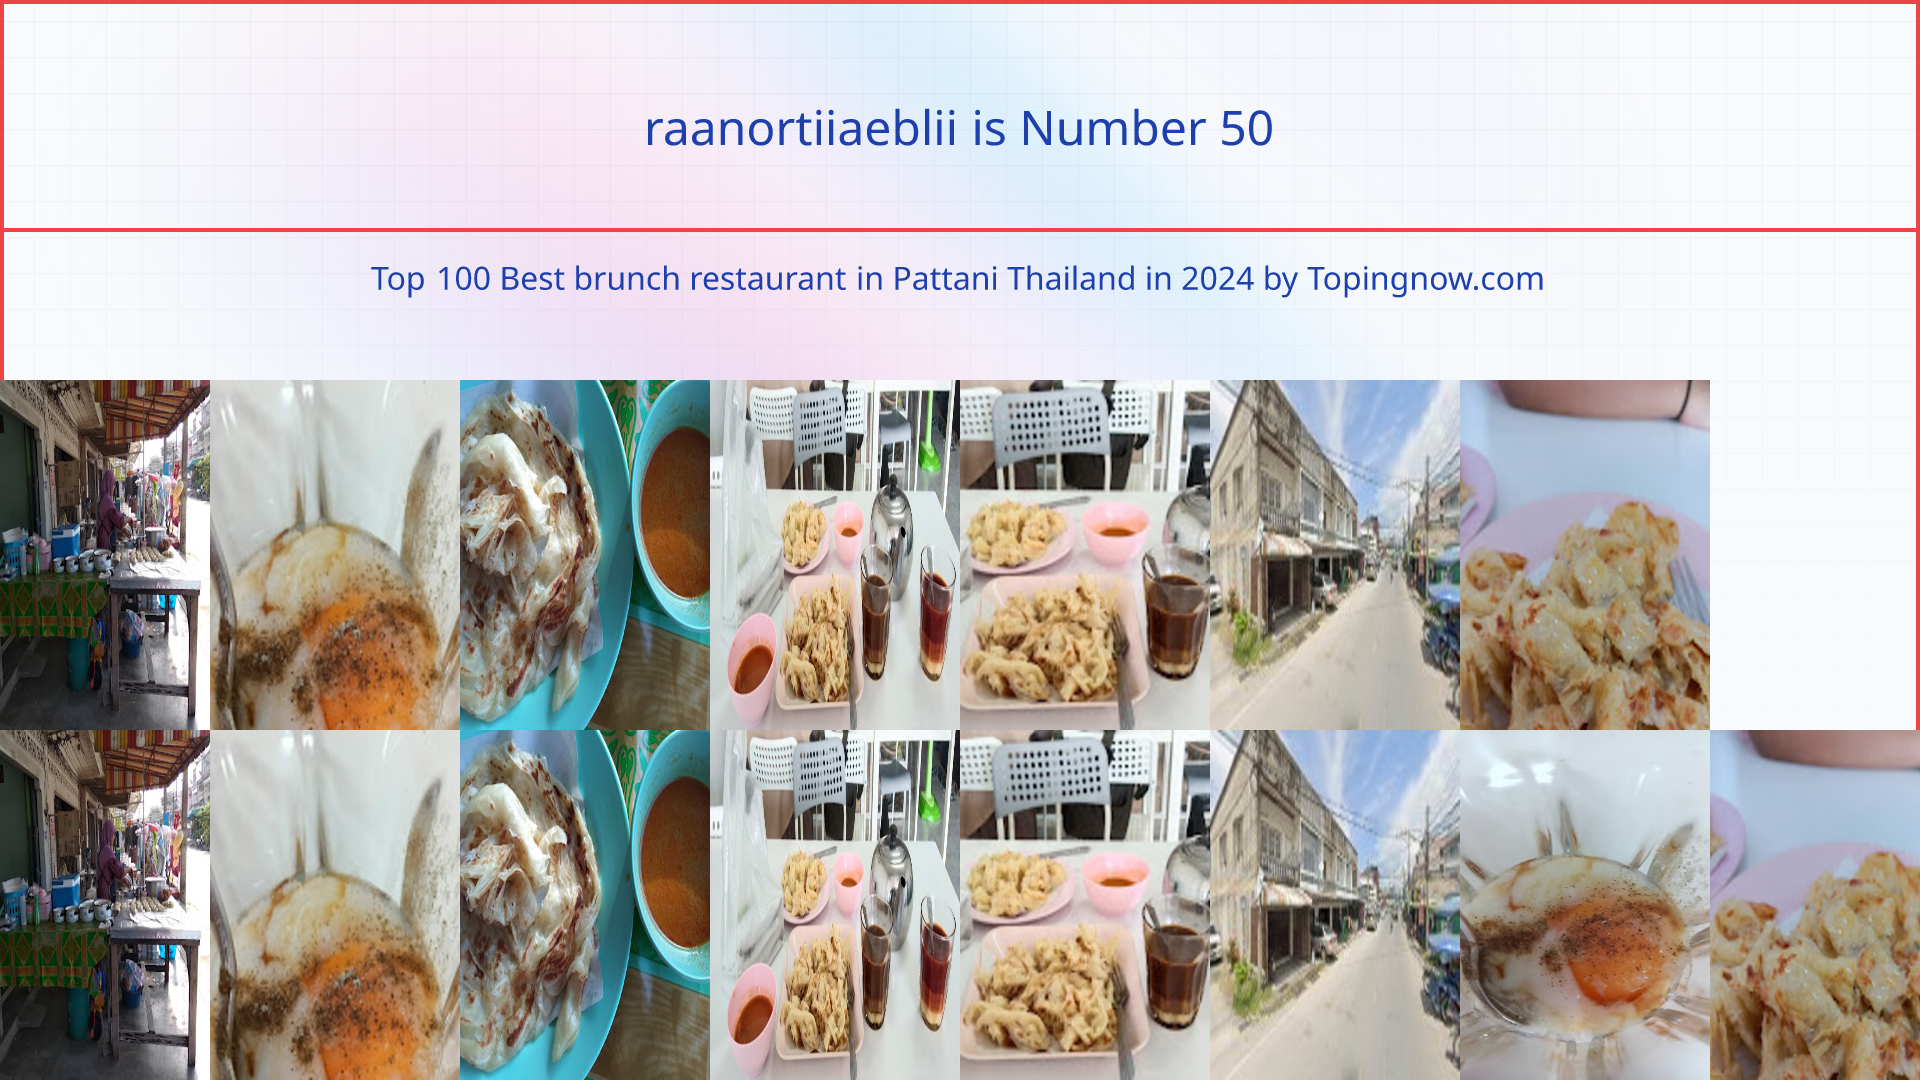 raanortiiaeblii: Top 100 Best brunch restaurant in Pattani Thailand in 2024